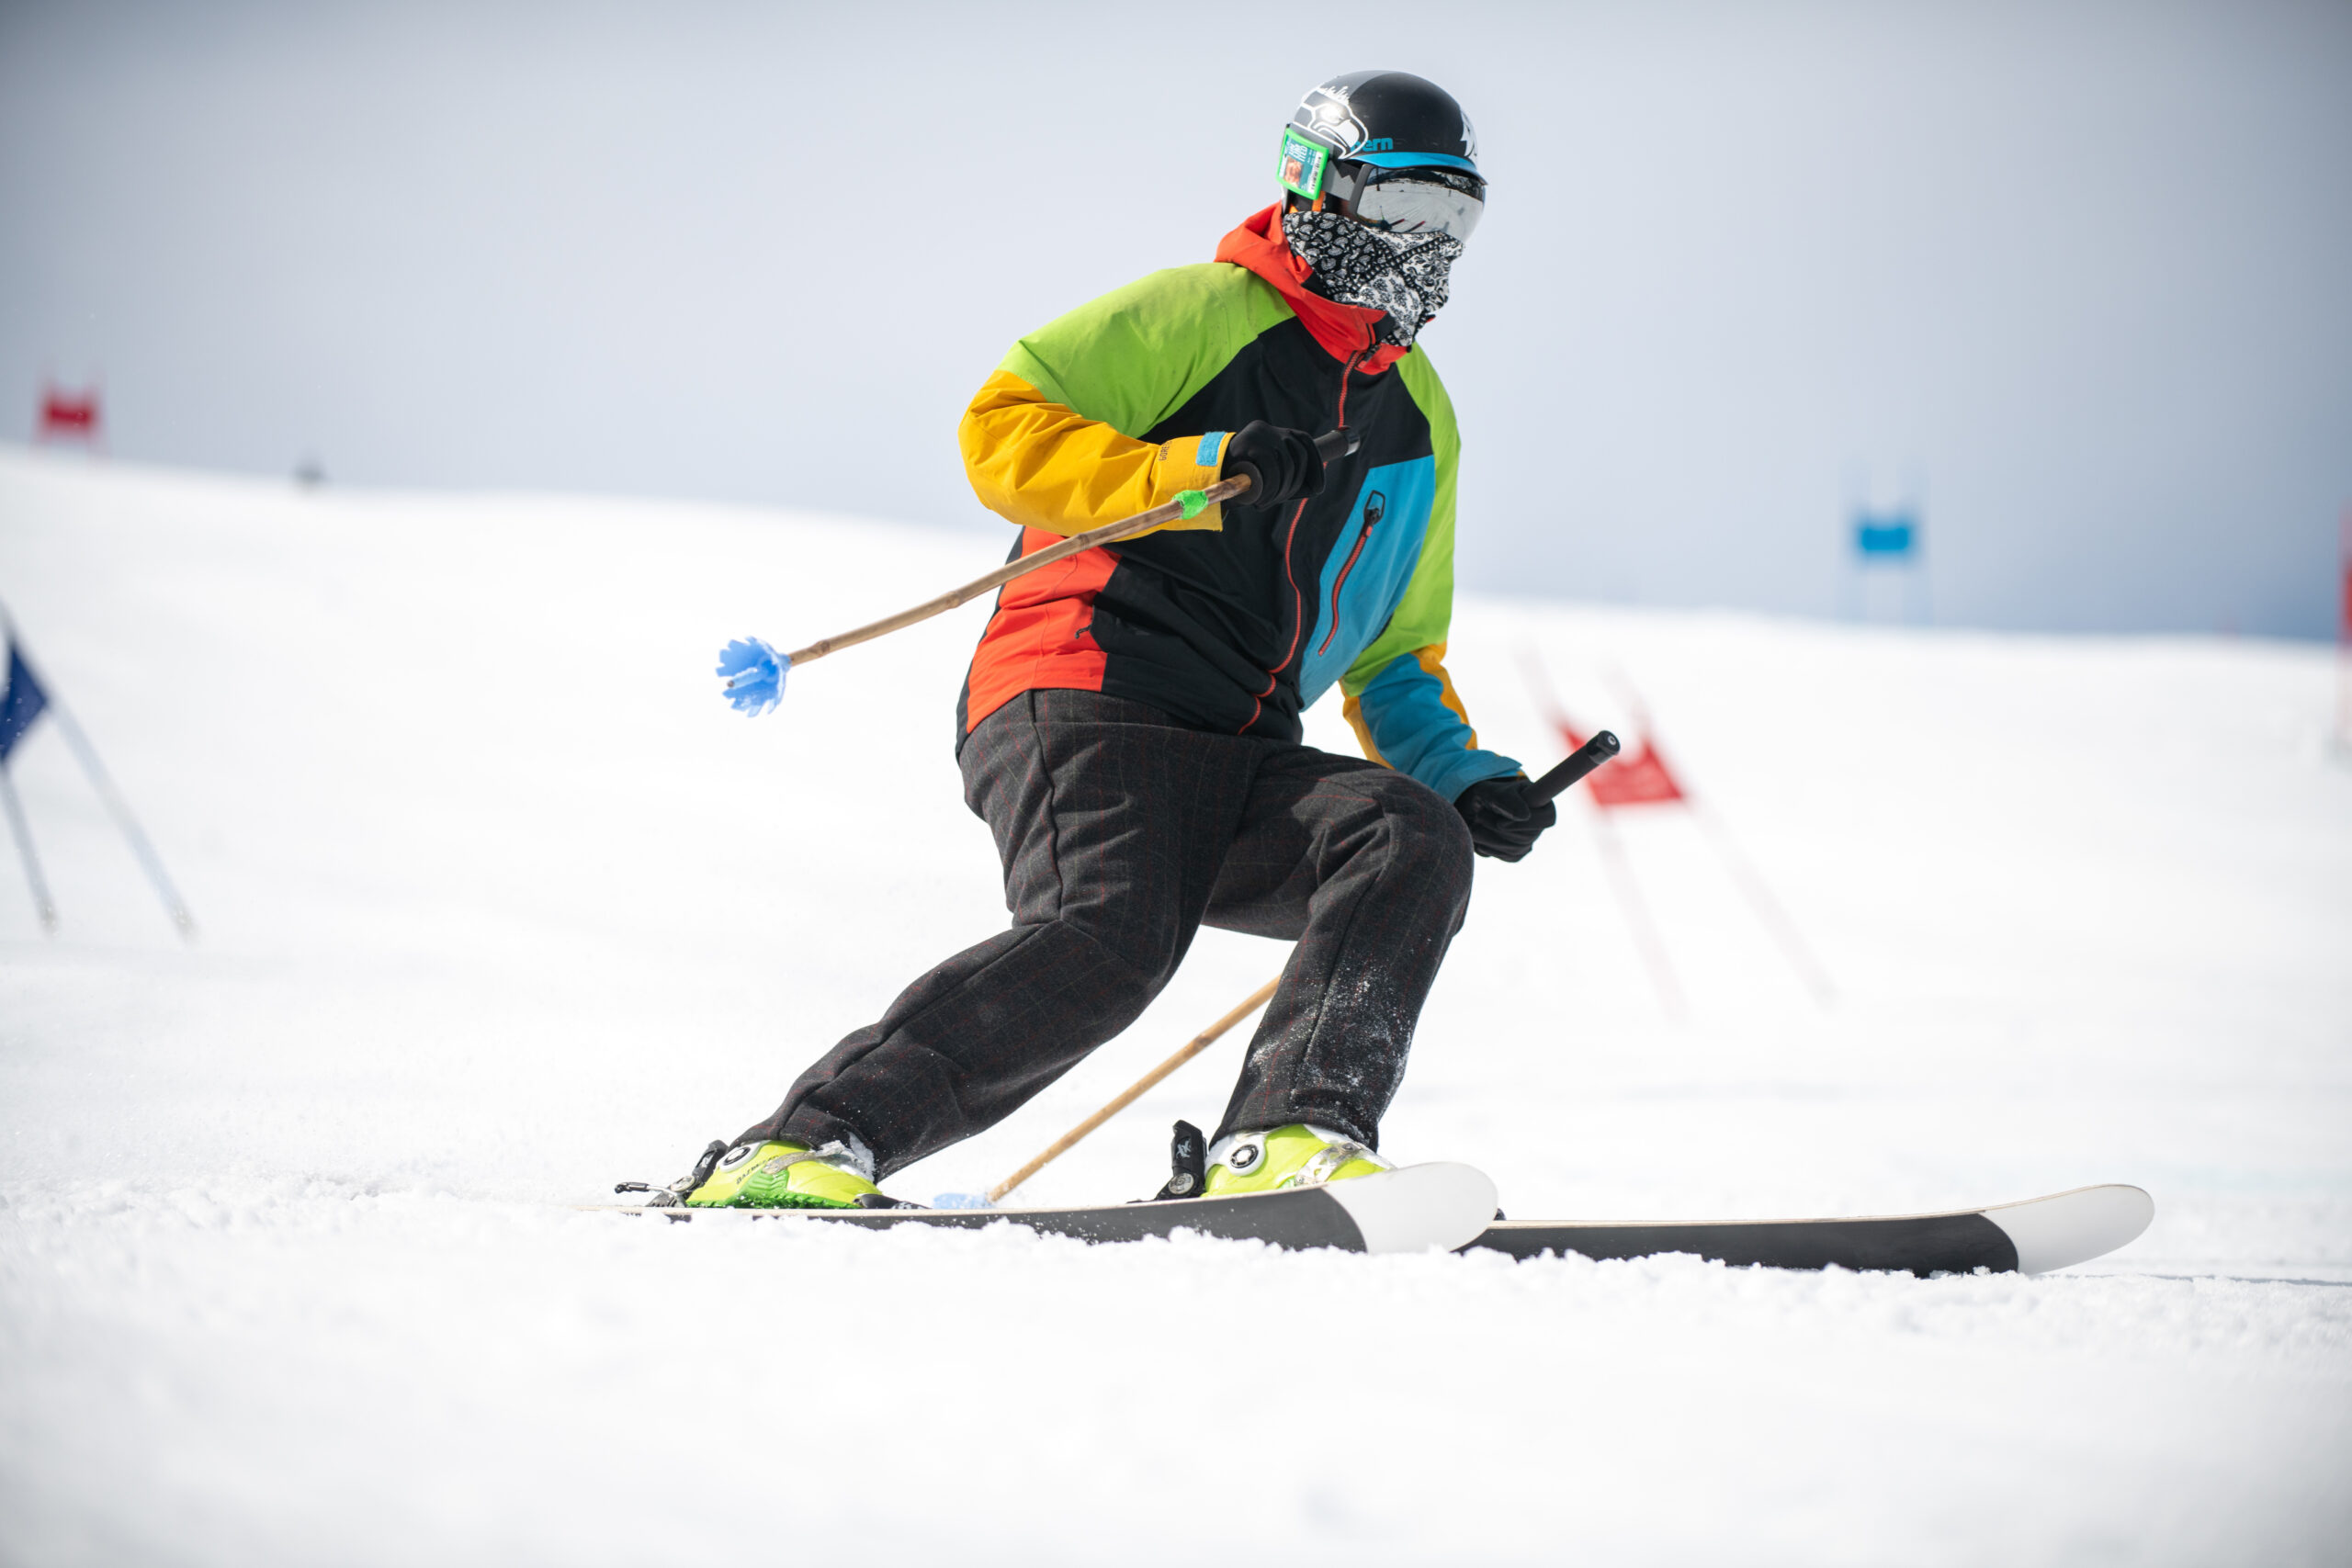 A Man in Ski Gear Skiing on Snow